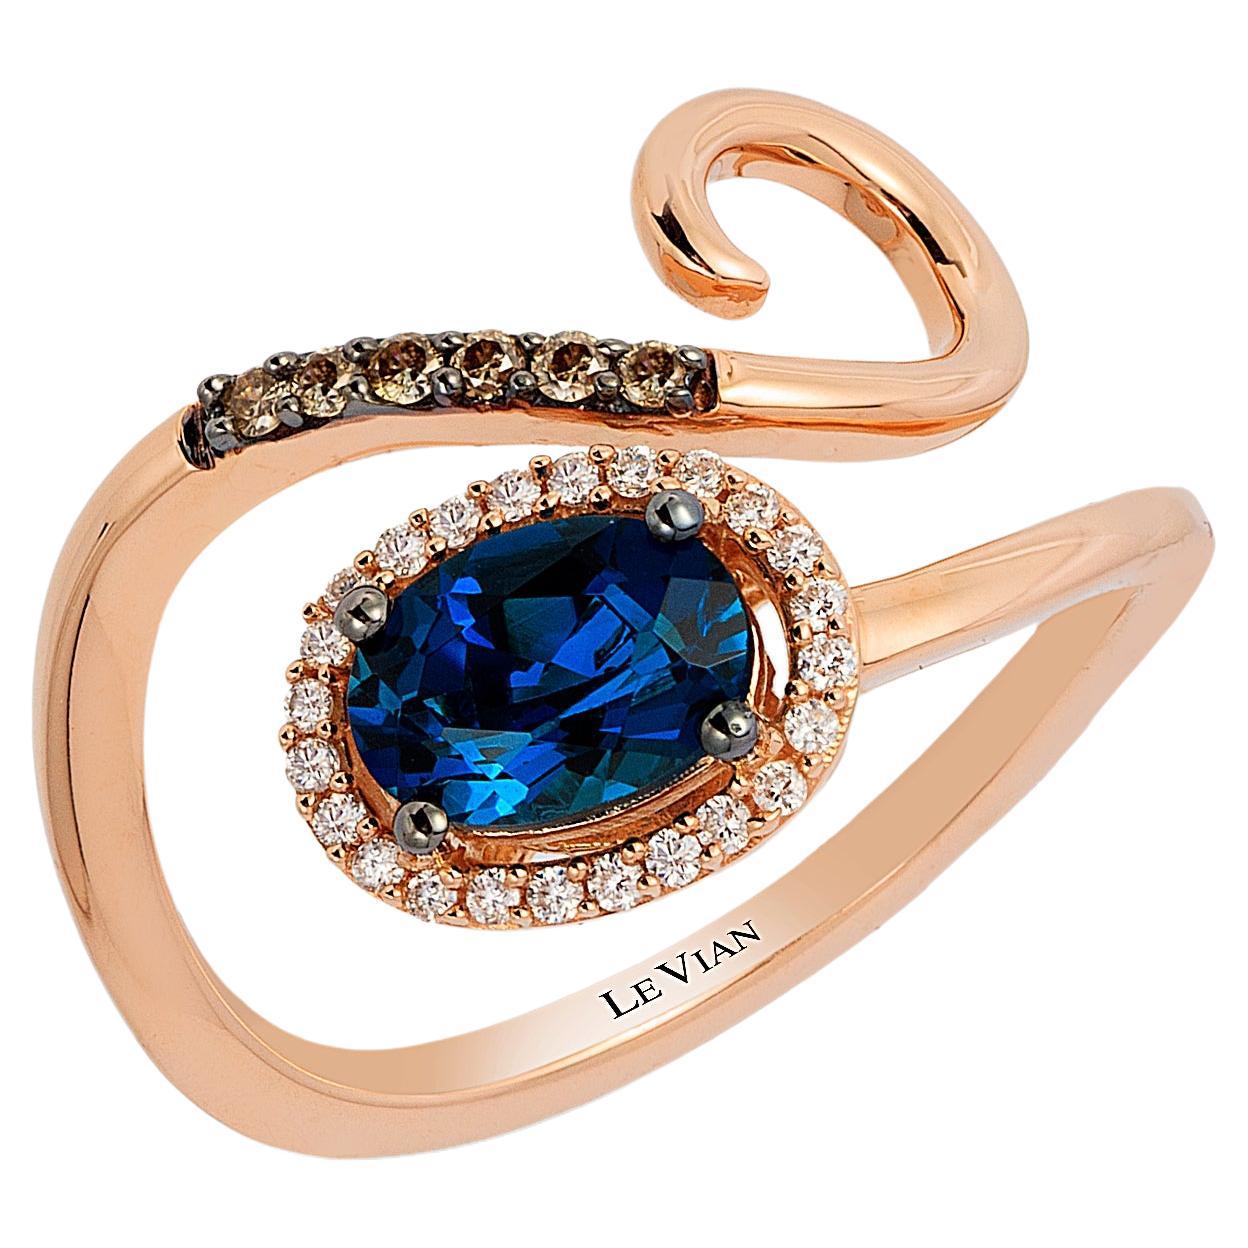 Le Vian 14K Rose Gold Blue Topaz White Chocolate Diamond Fashion Ring